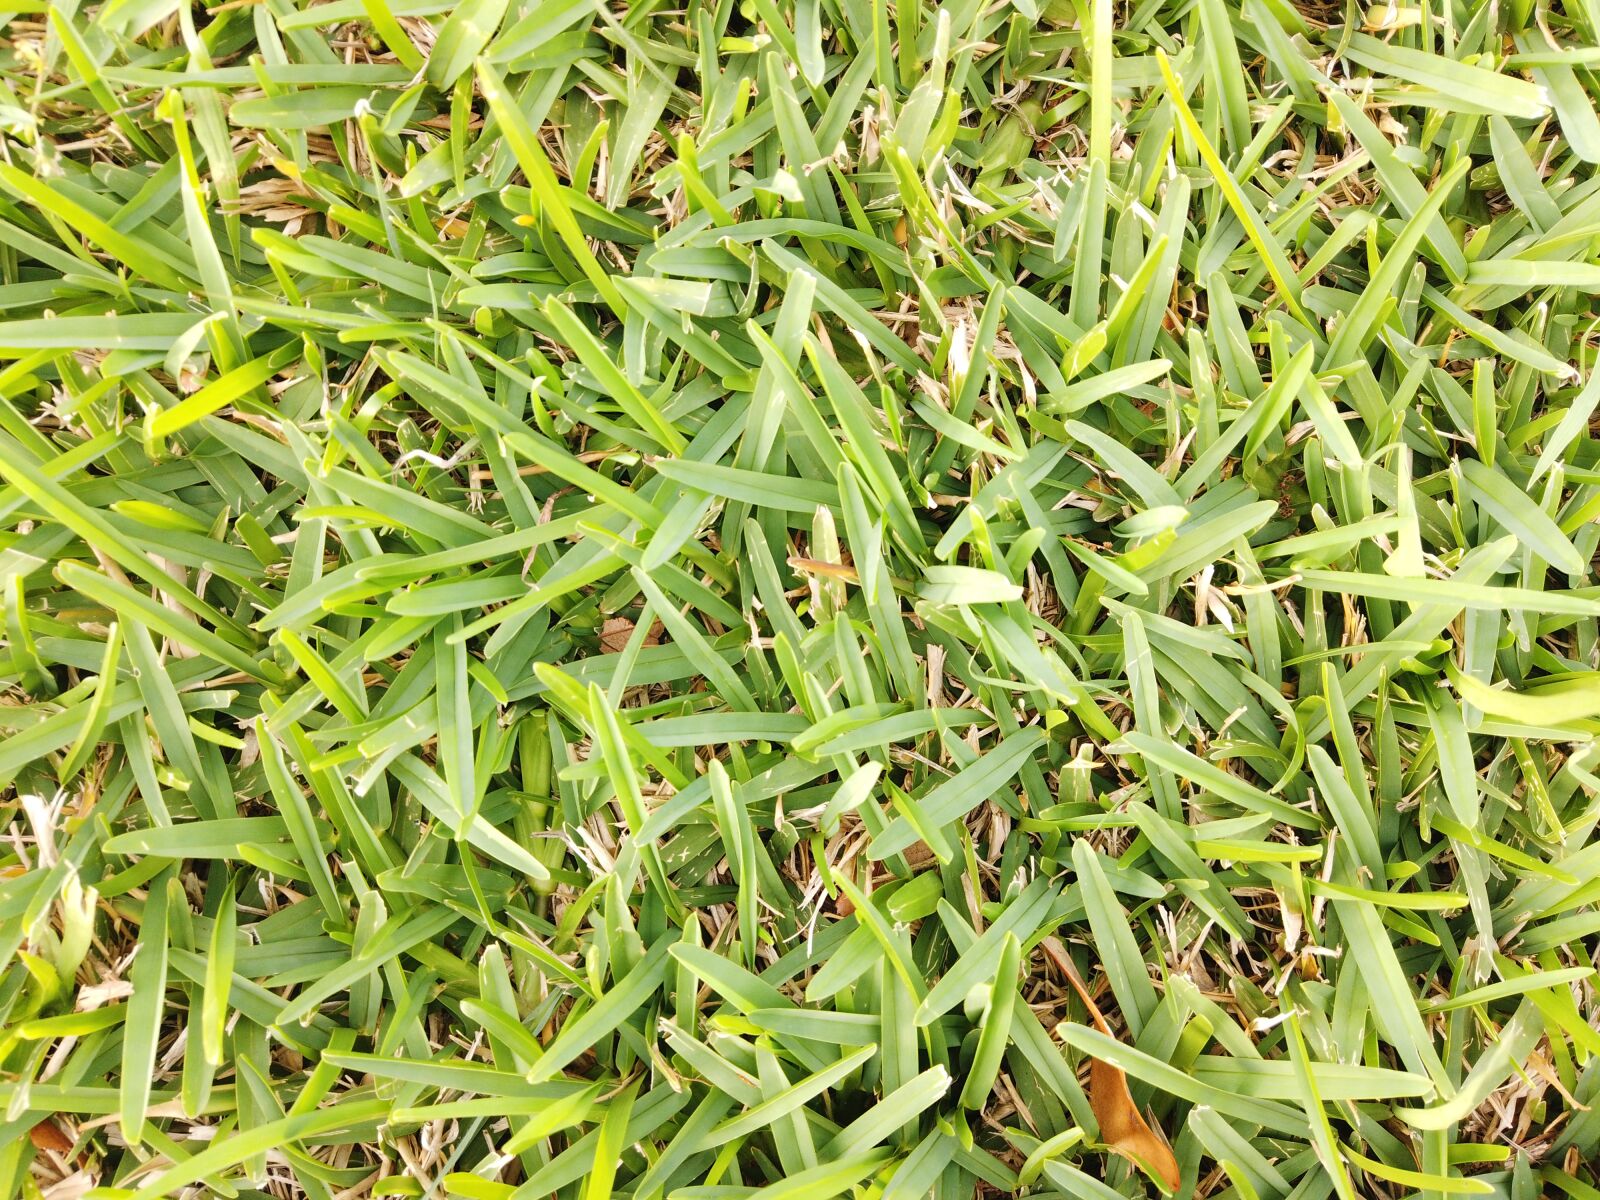 DJI Osmo Pocket sample photo. Grass, green, nature photography